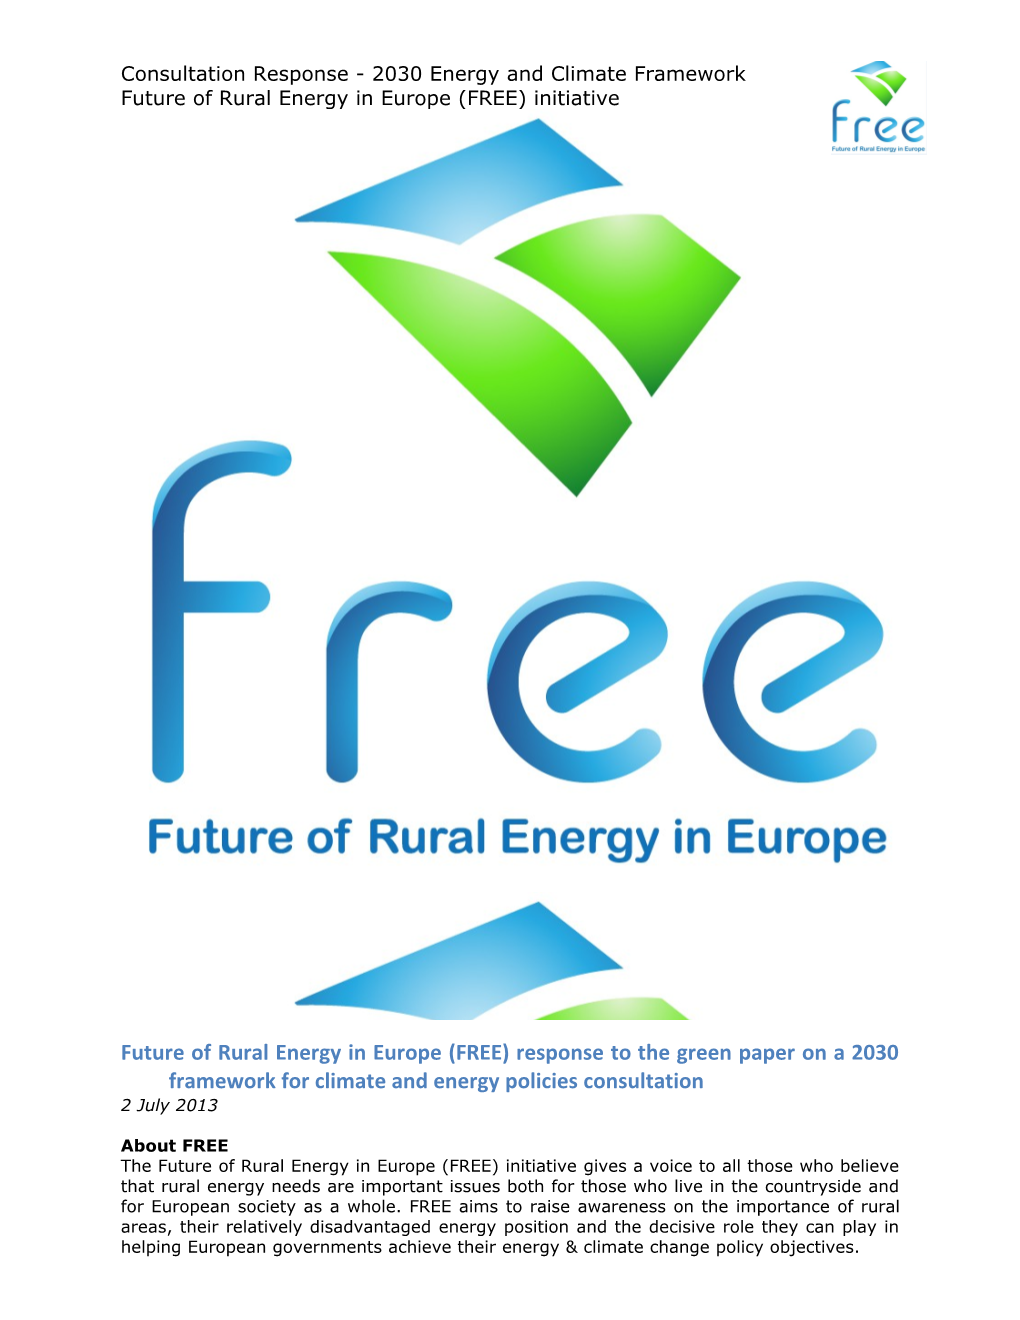 Future of Rural Energy in Europe (FREE) Initiative